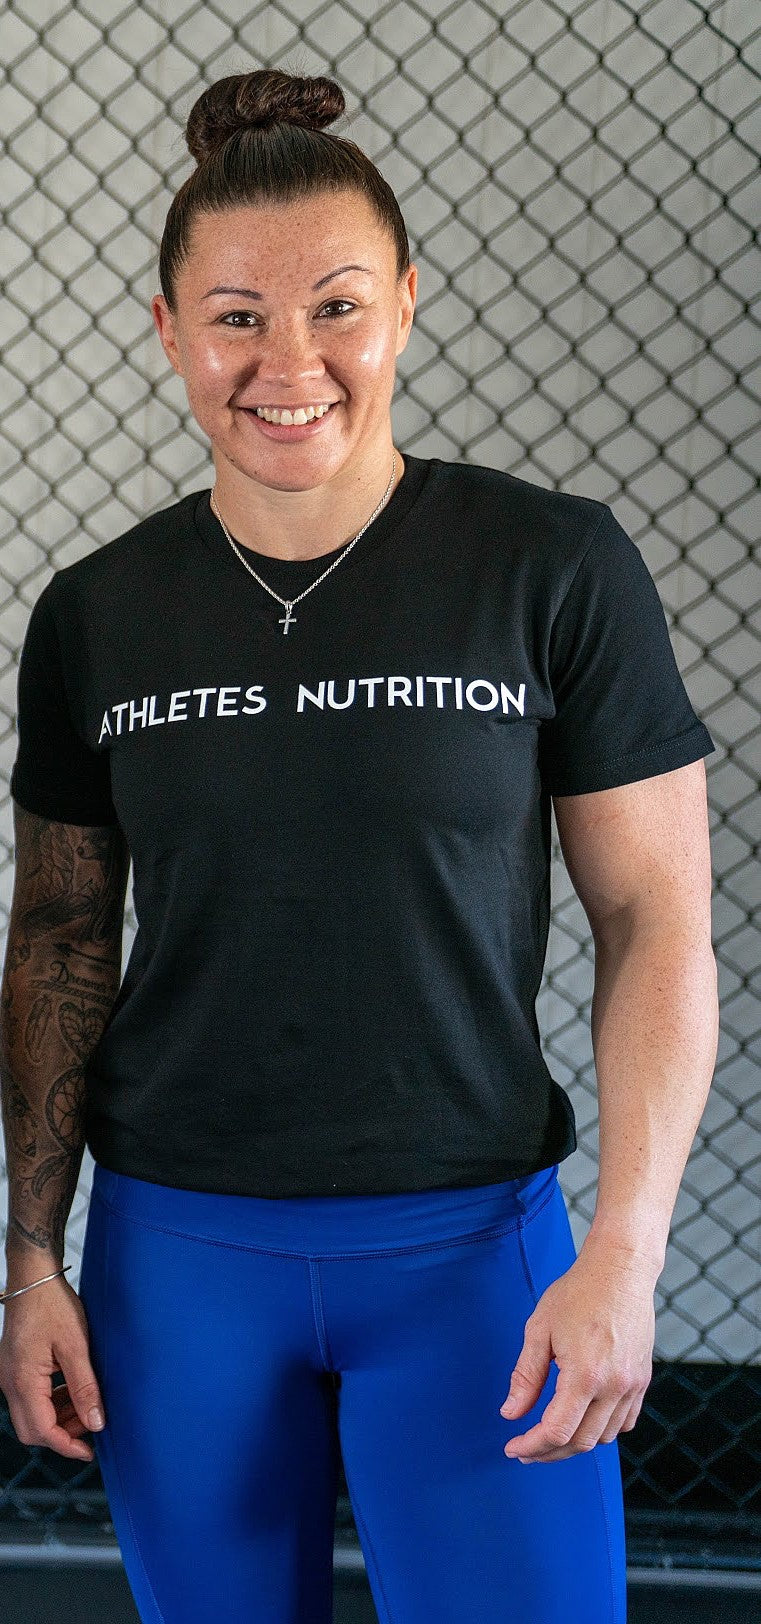 Women's Athletes Nutrition T Shirt